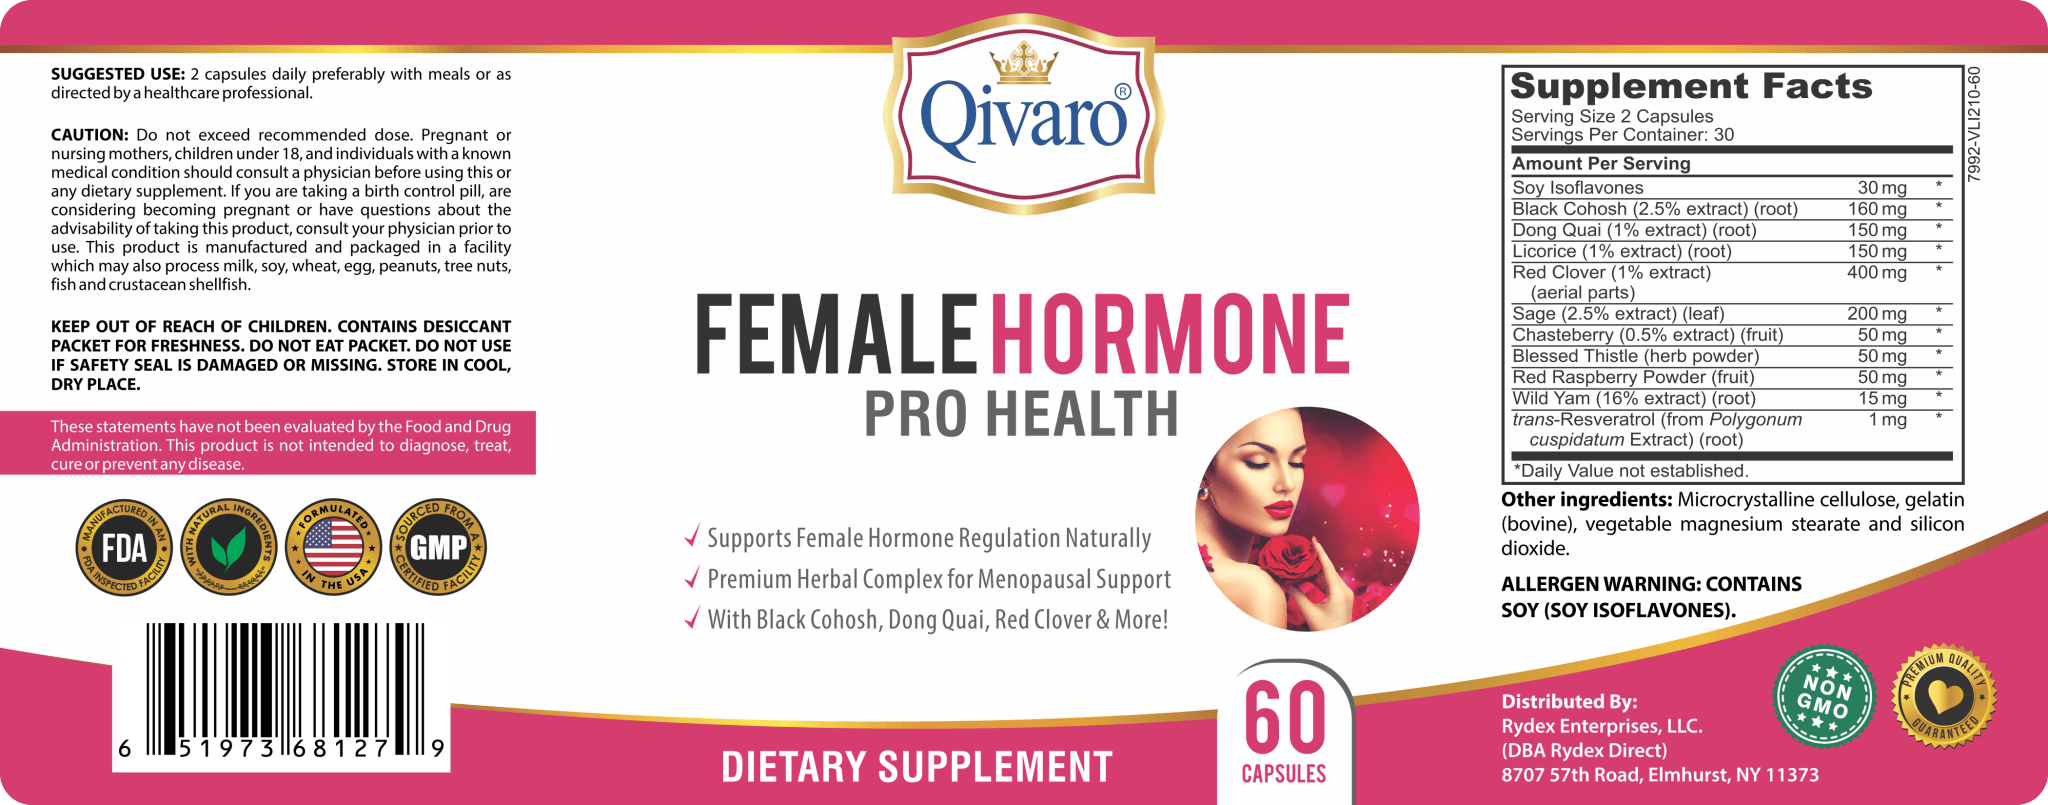 Female Hormone Pro Health By Qivaro - (60 capsules) - Qivaro USA